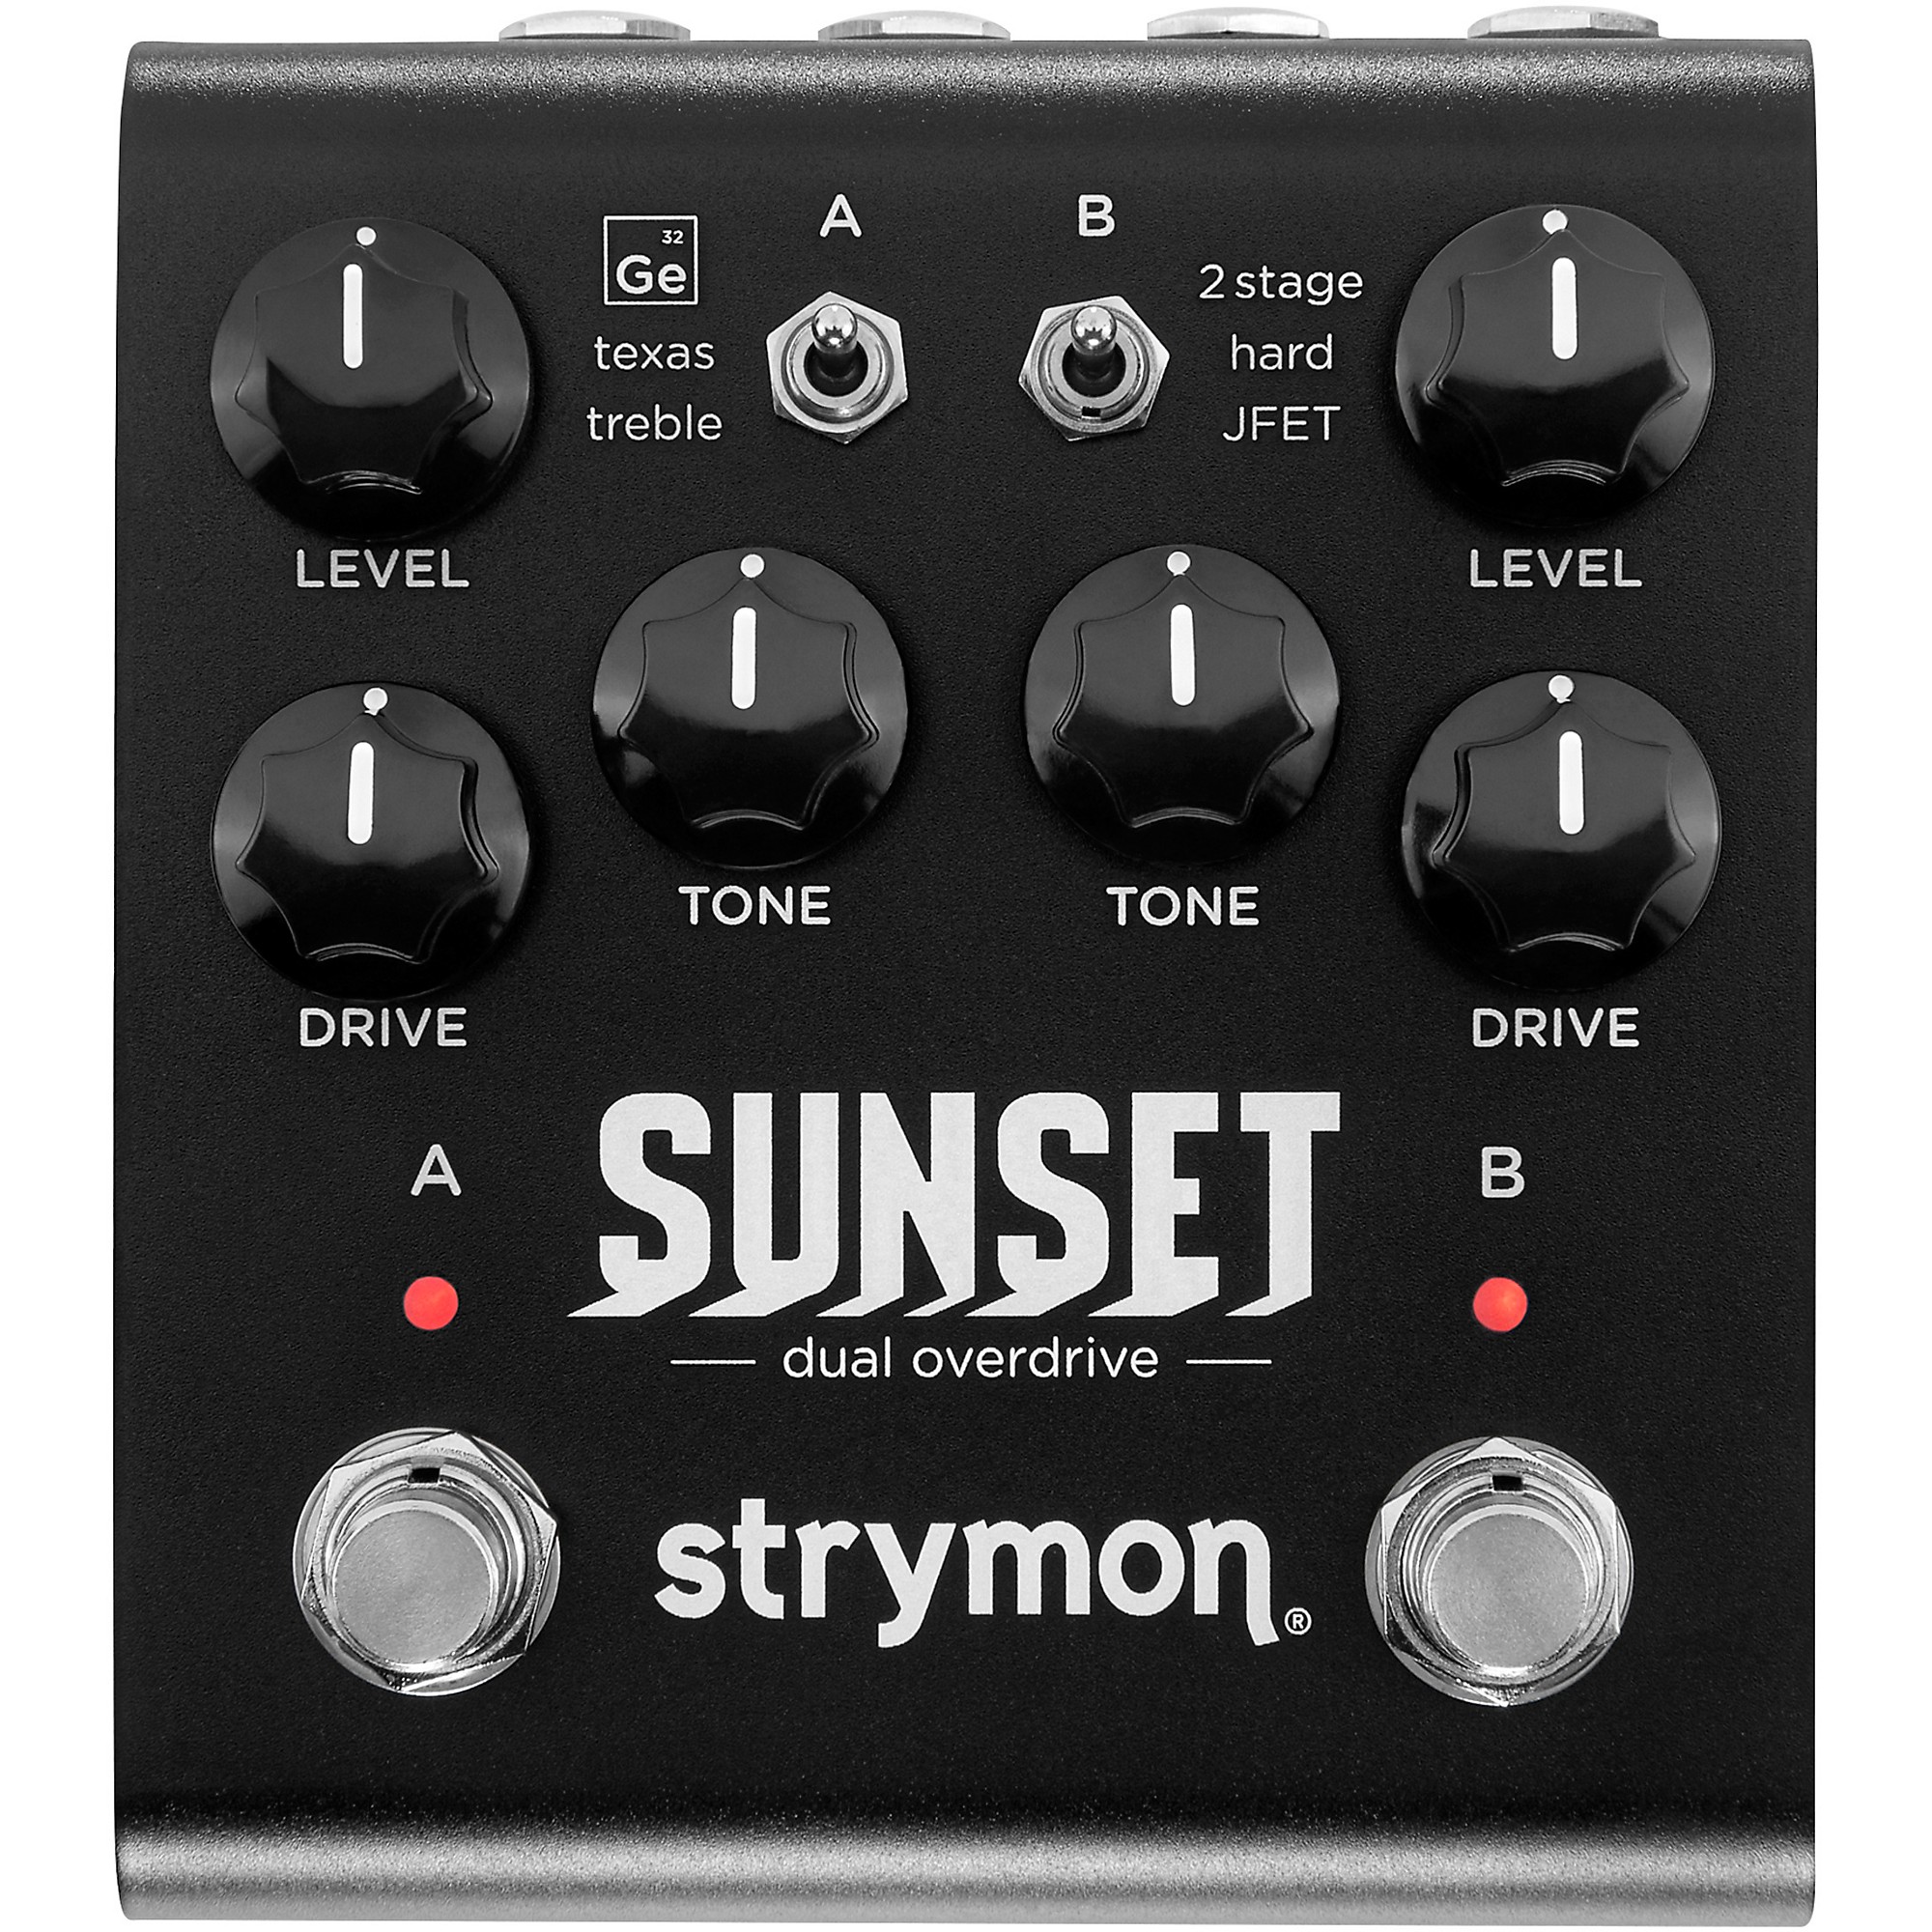 Sunset Support - Strymon